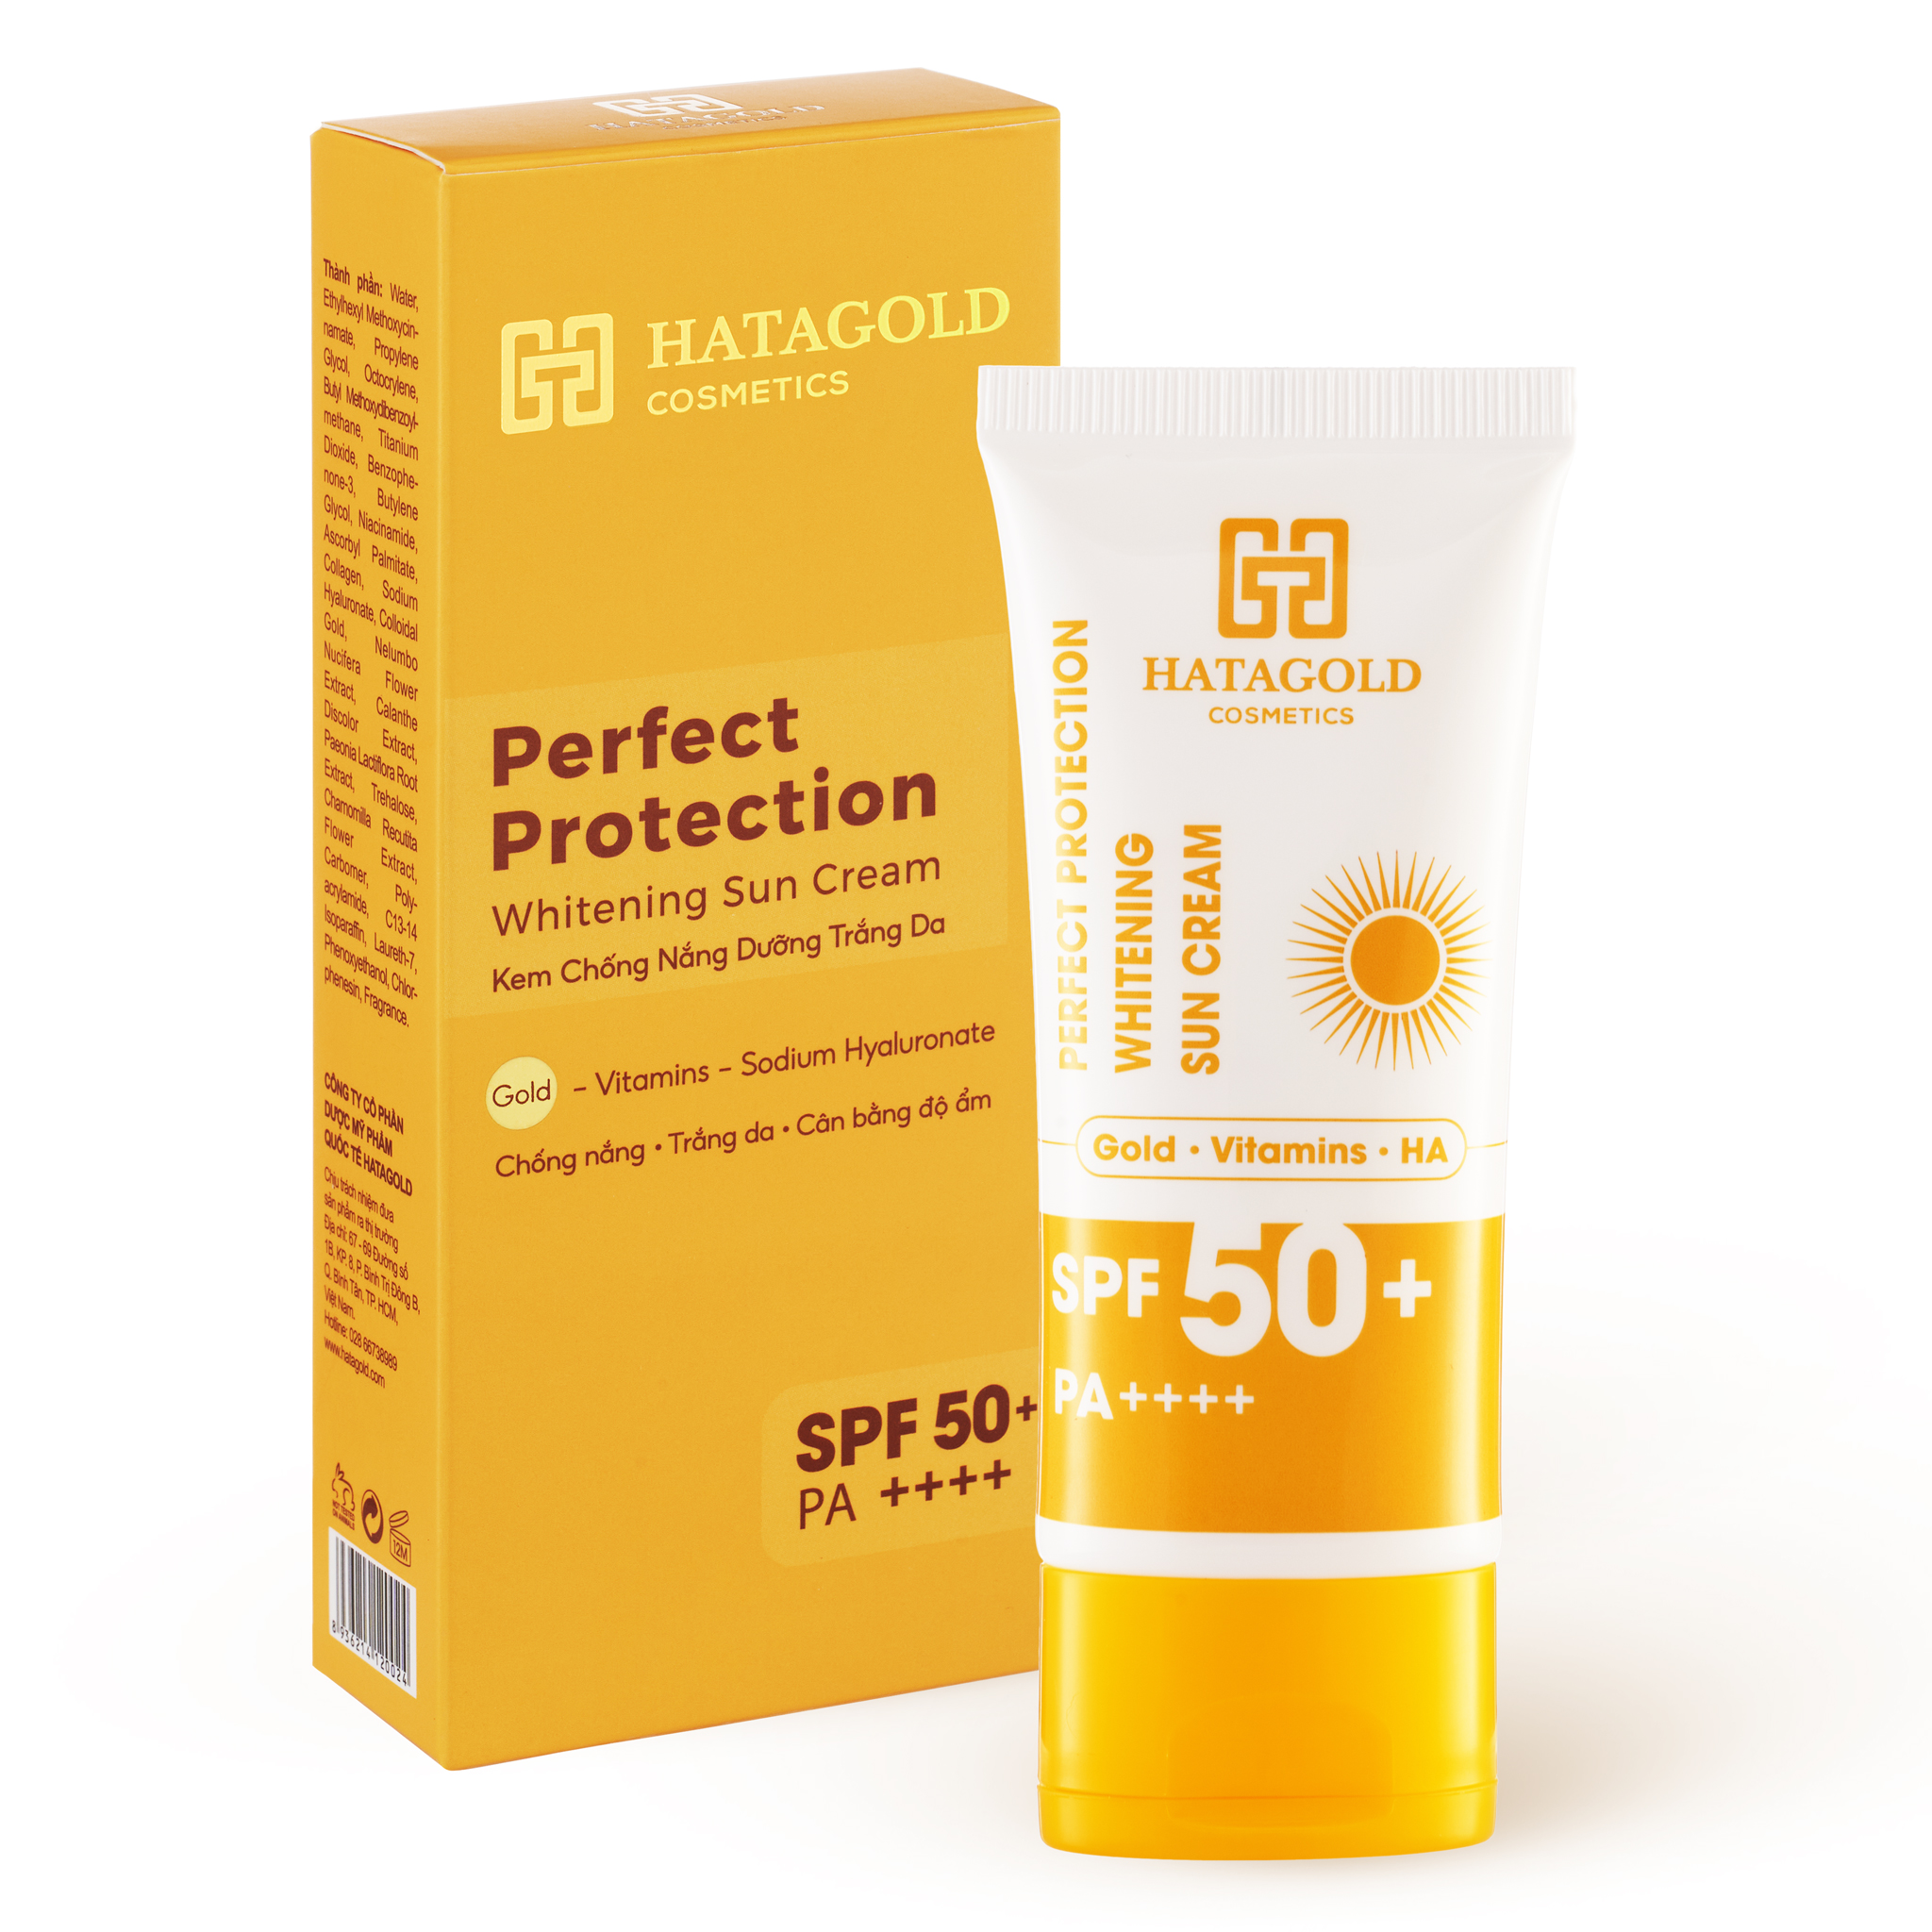 HATAGOLD | Kem Chống Nắng Cúc La Mã SPF50+ - Perfect Protection Whitening Sun Cream SPF 50+ PA++++ - KL:60g